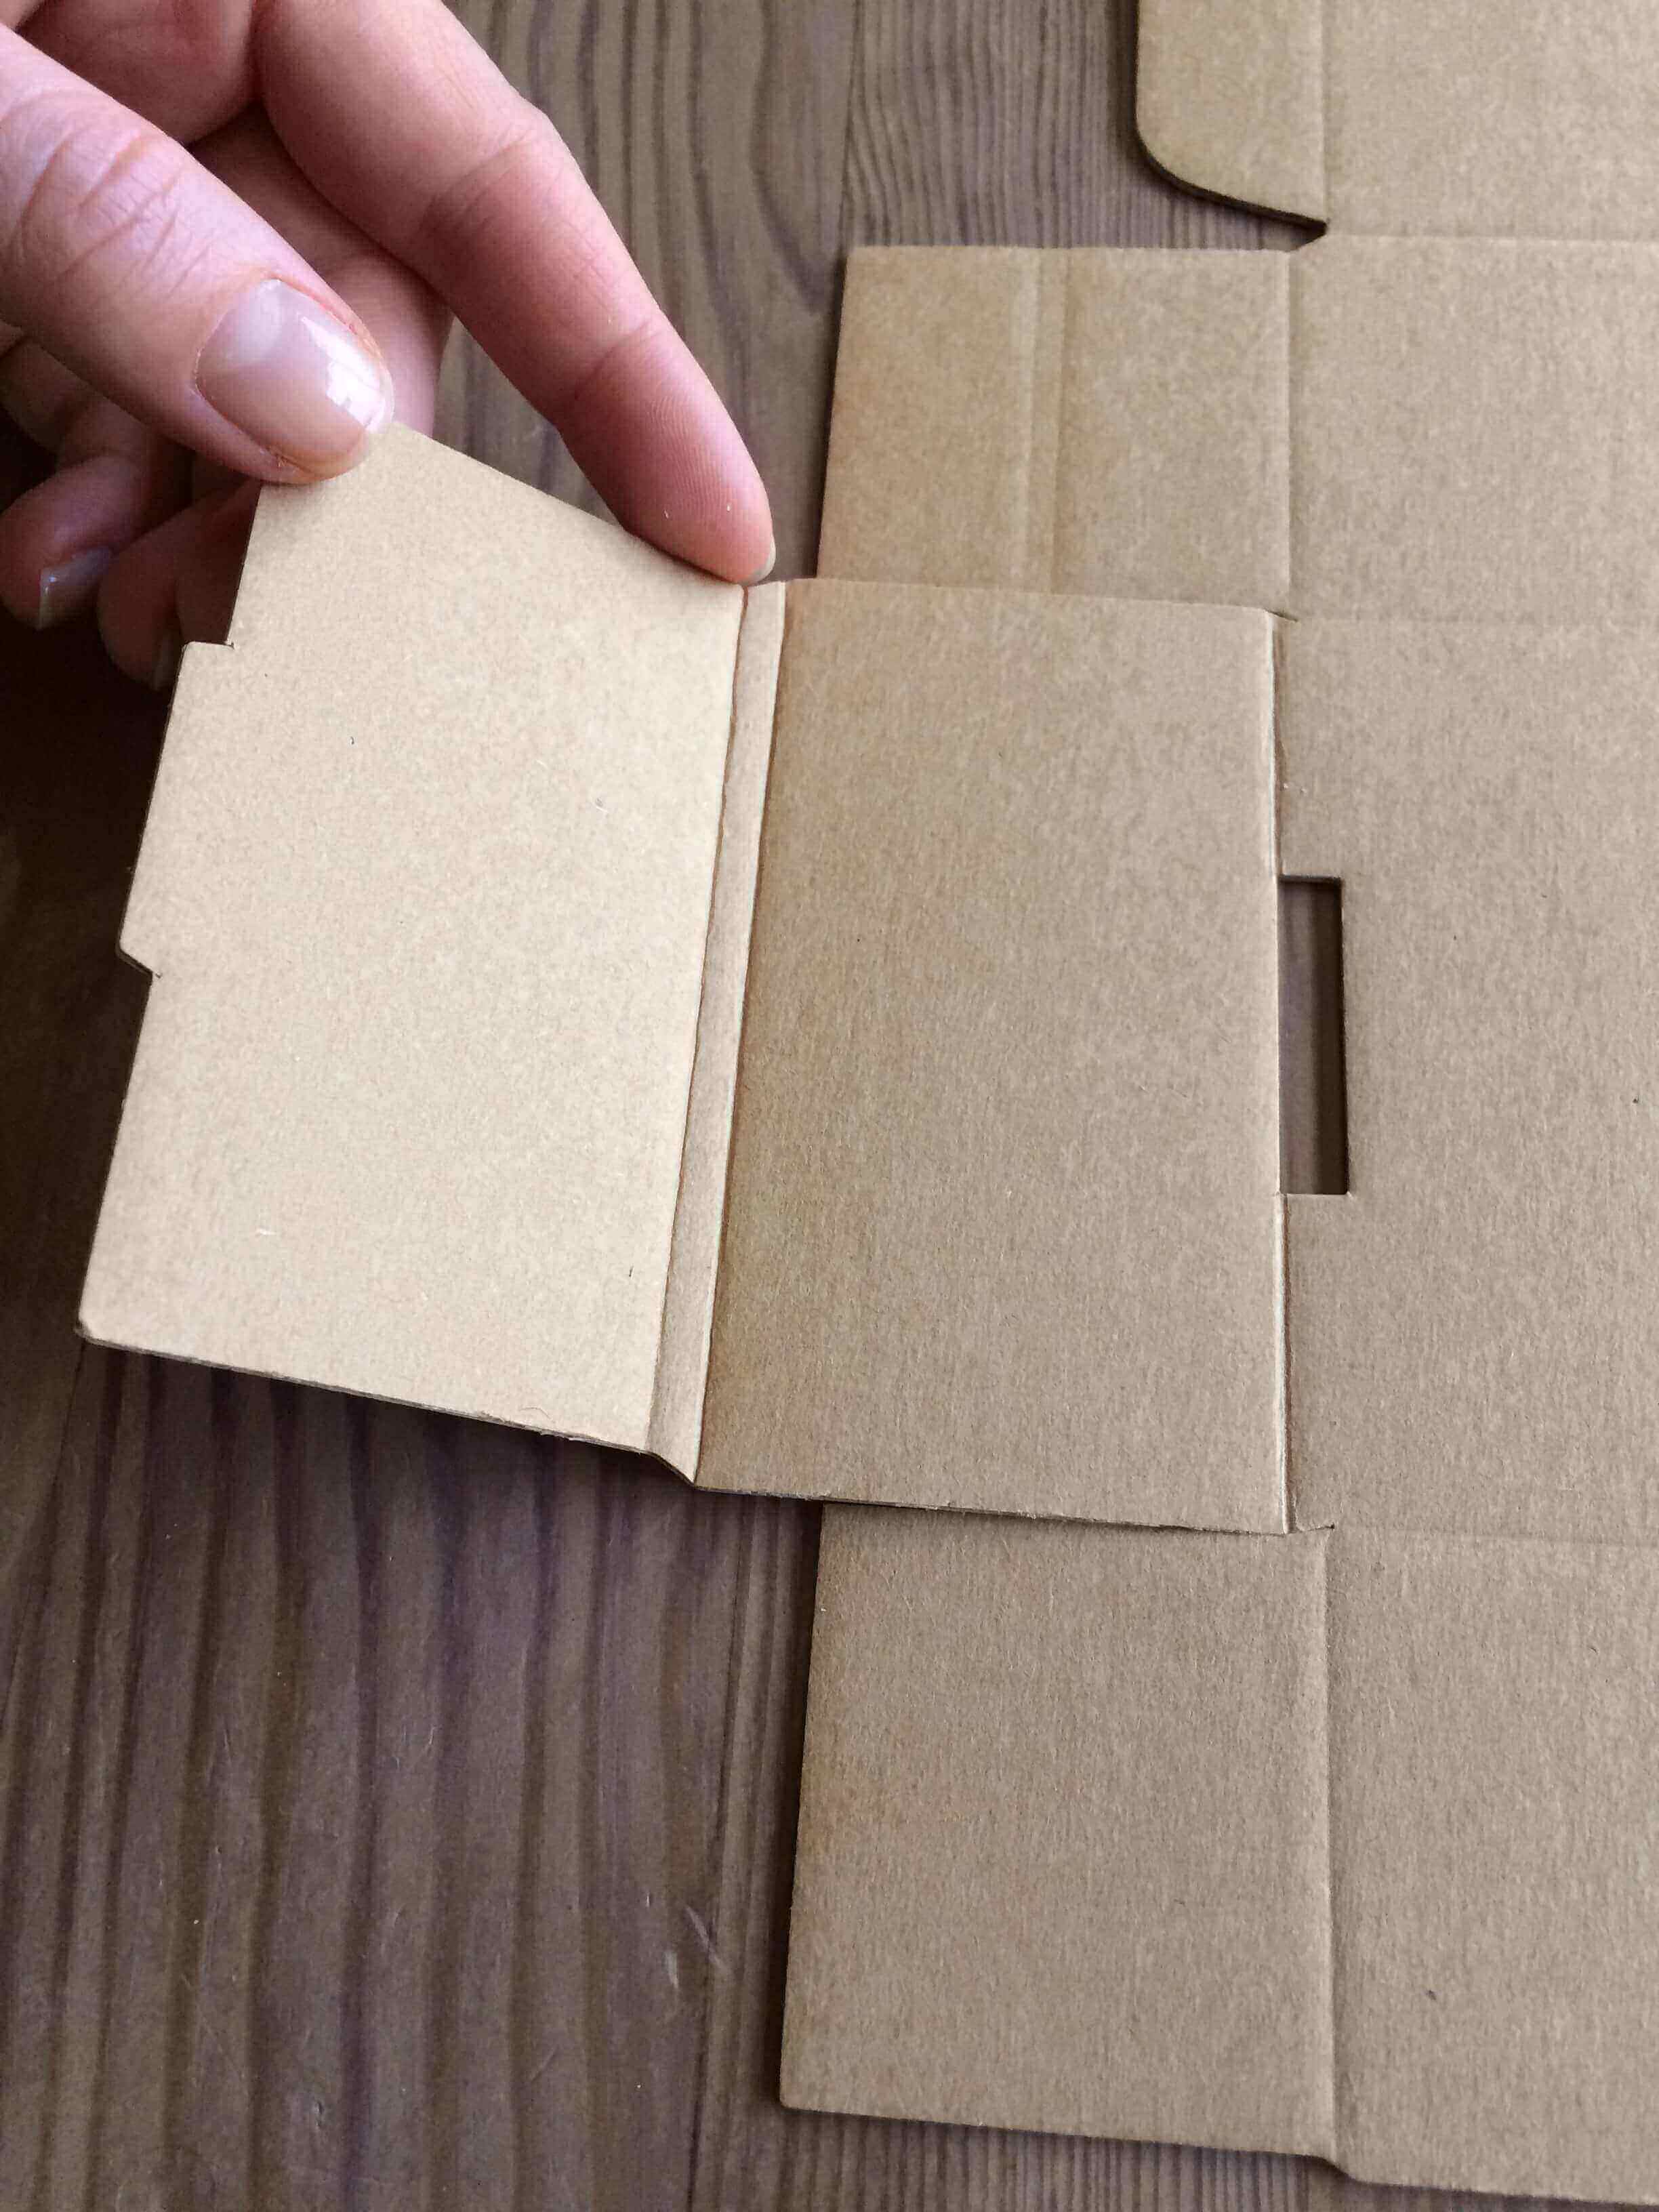 folding boxes_packhelp_3